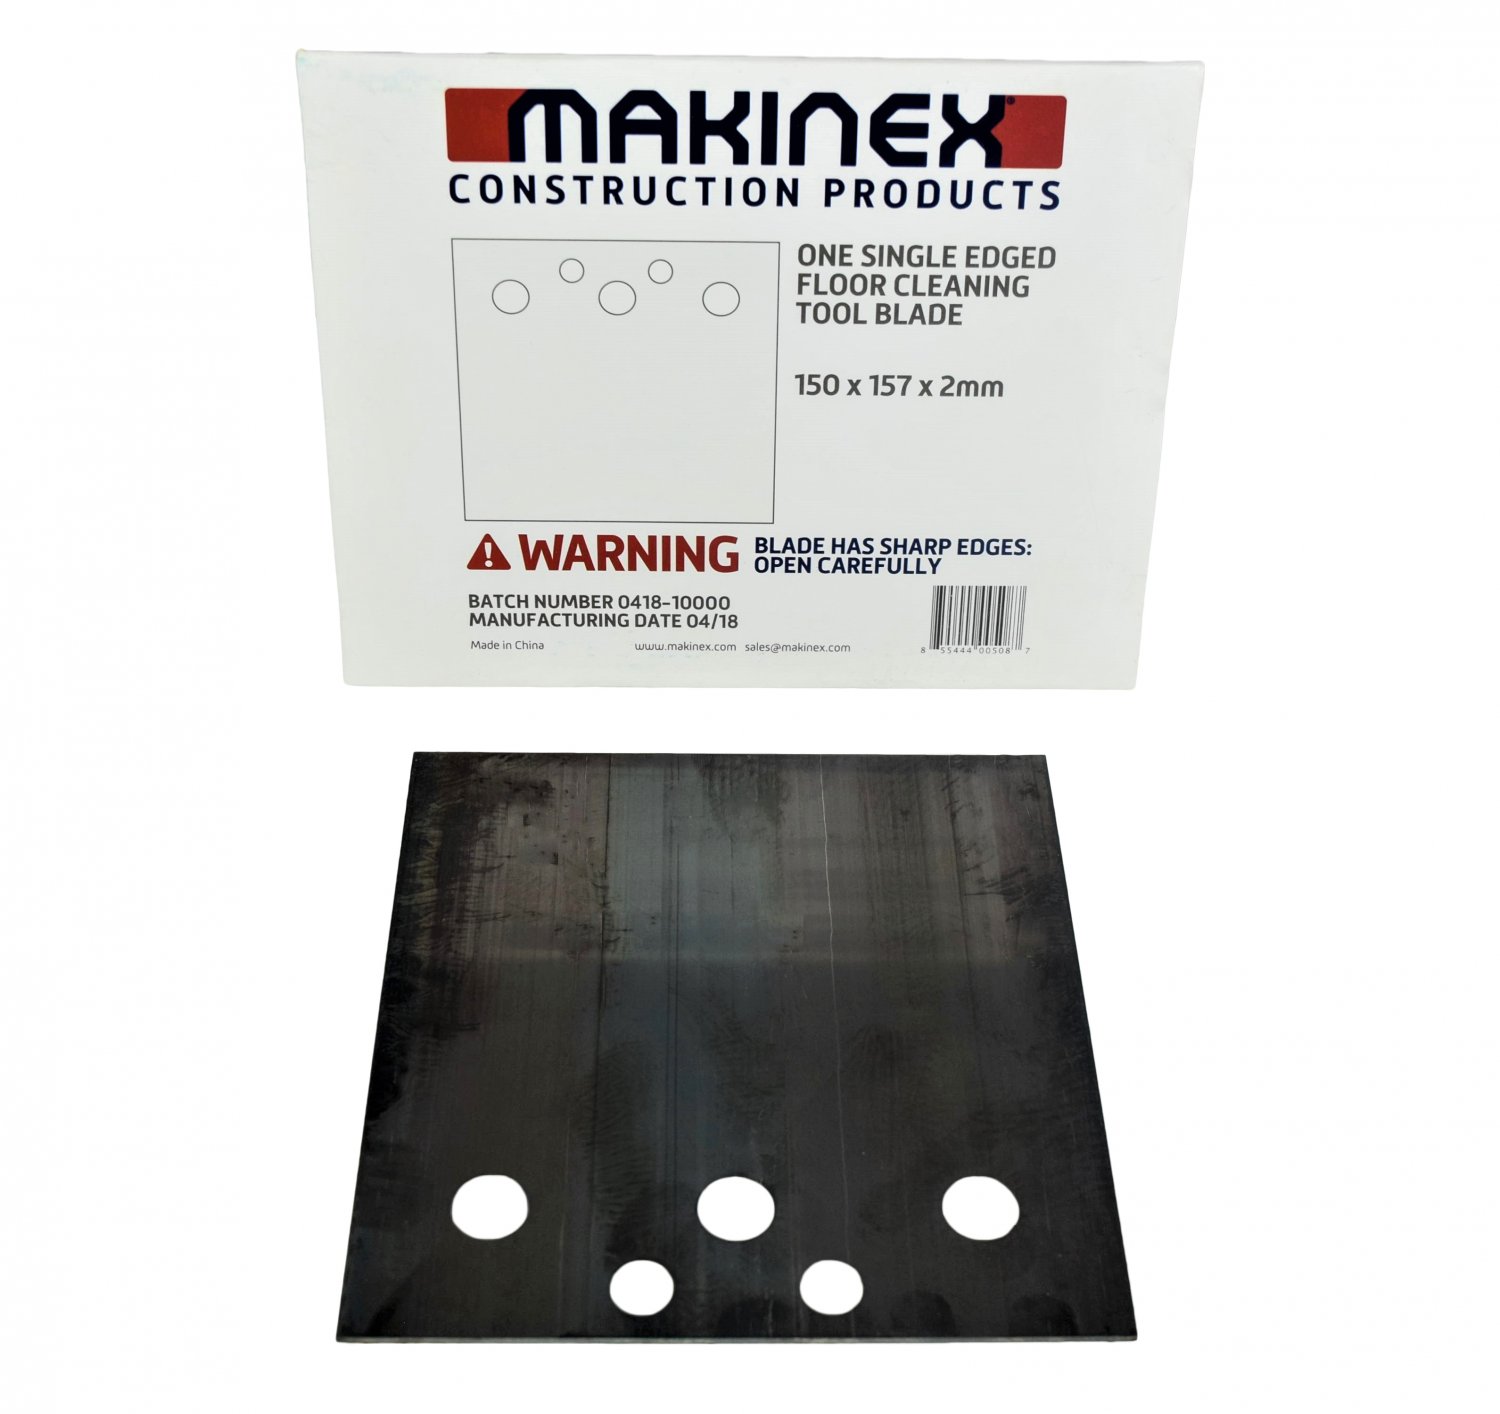 Makinex Tile Smasher Replacement Blade